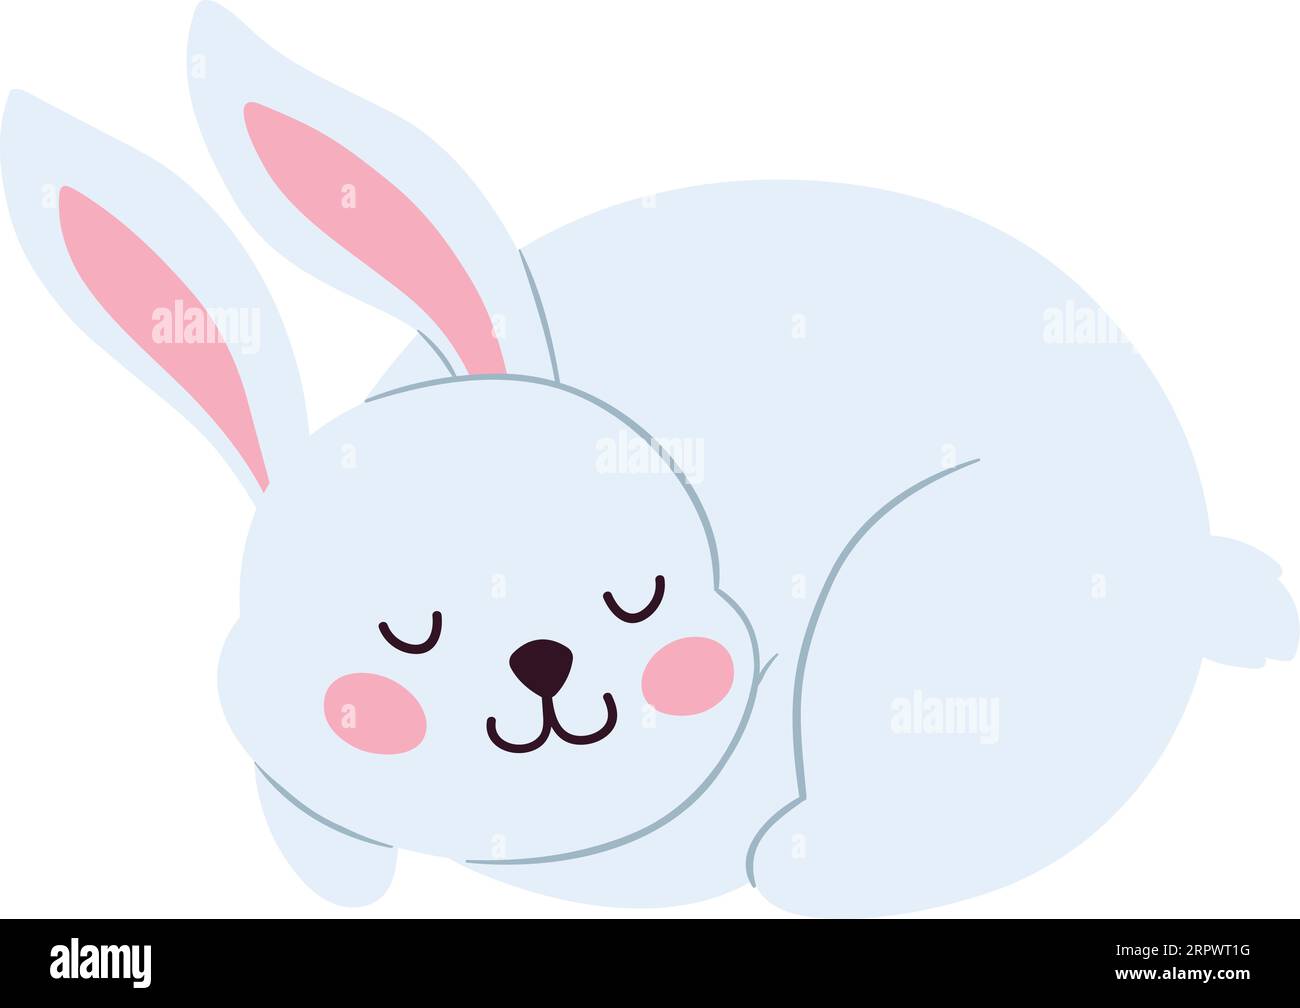 2,346 Sleepy Bunny Images, Stock Photos, 3D objects, & Vectors